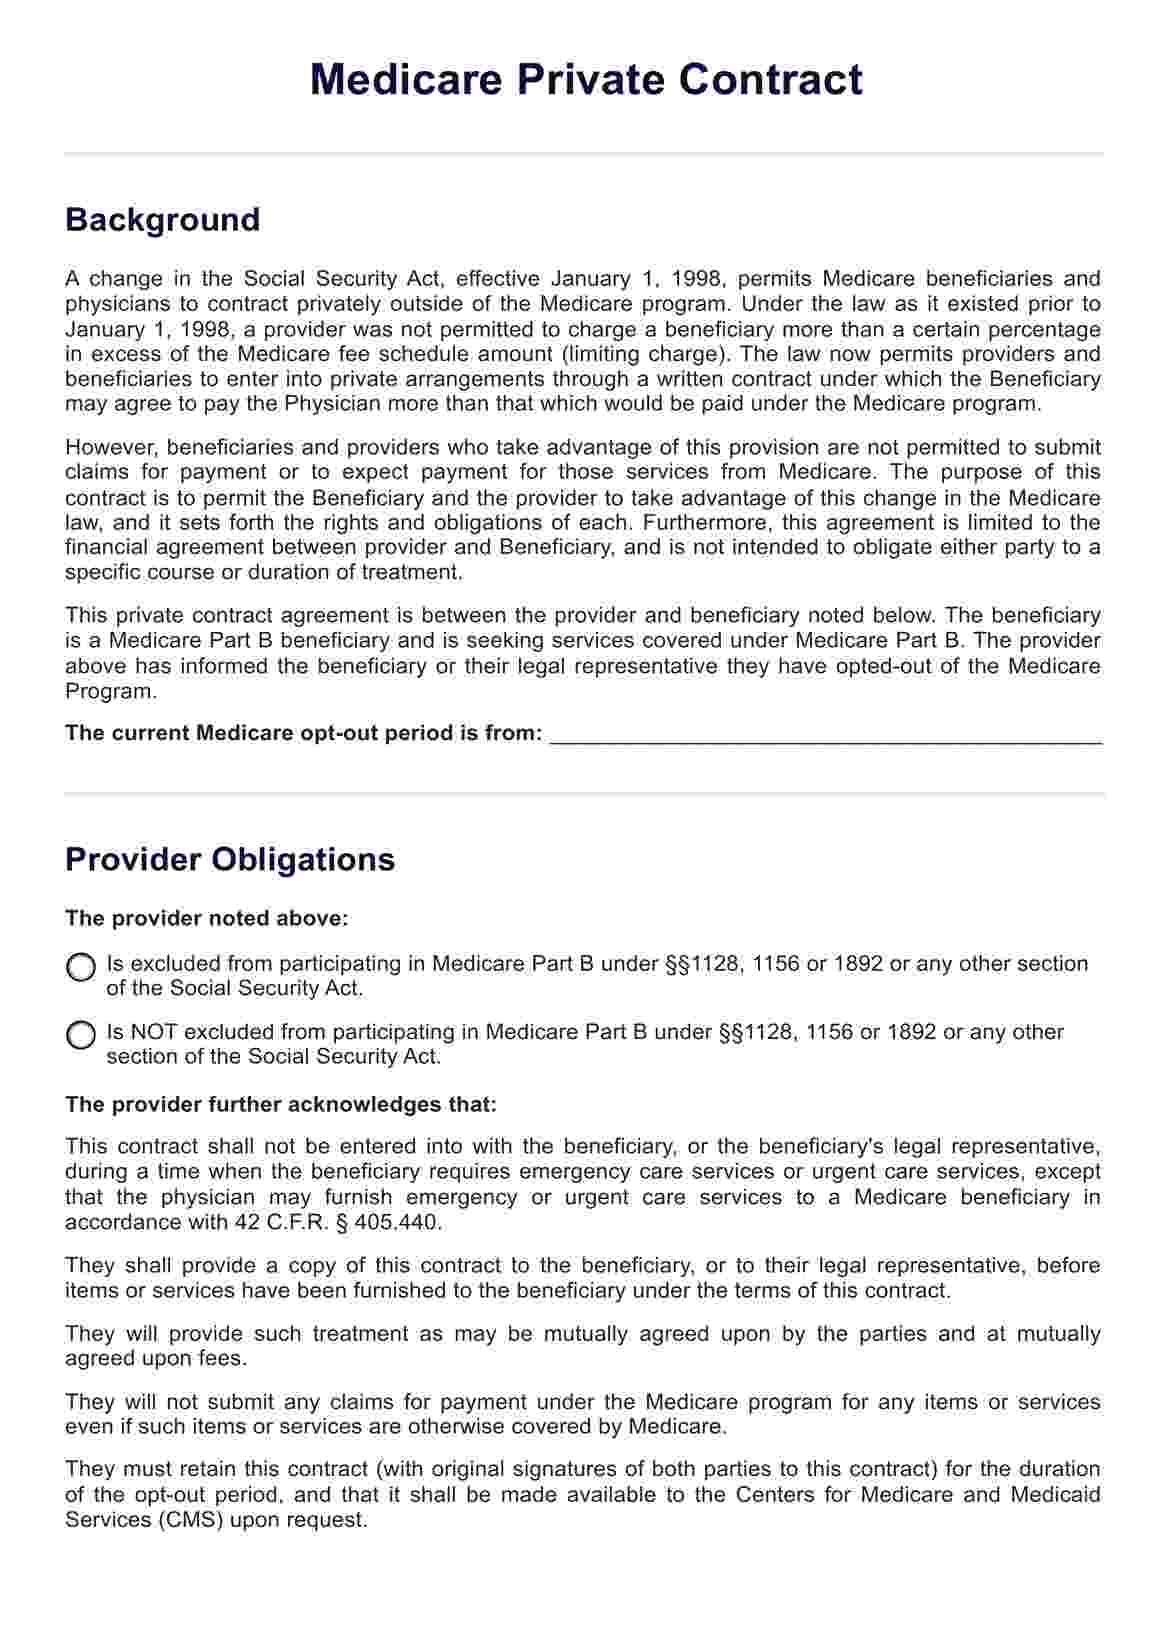 Medicare Private Contract PDF Example